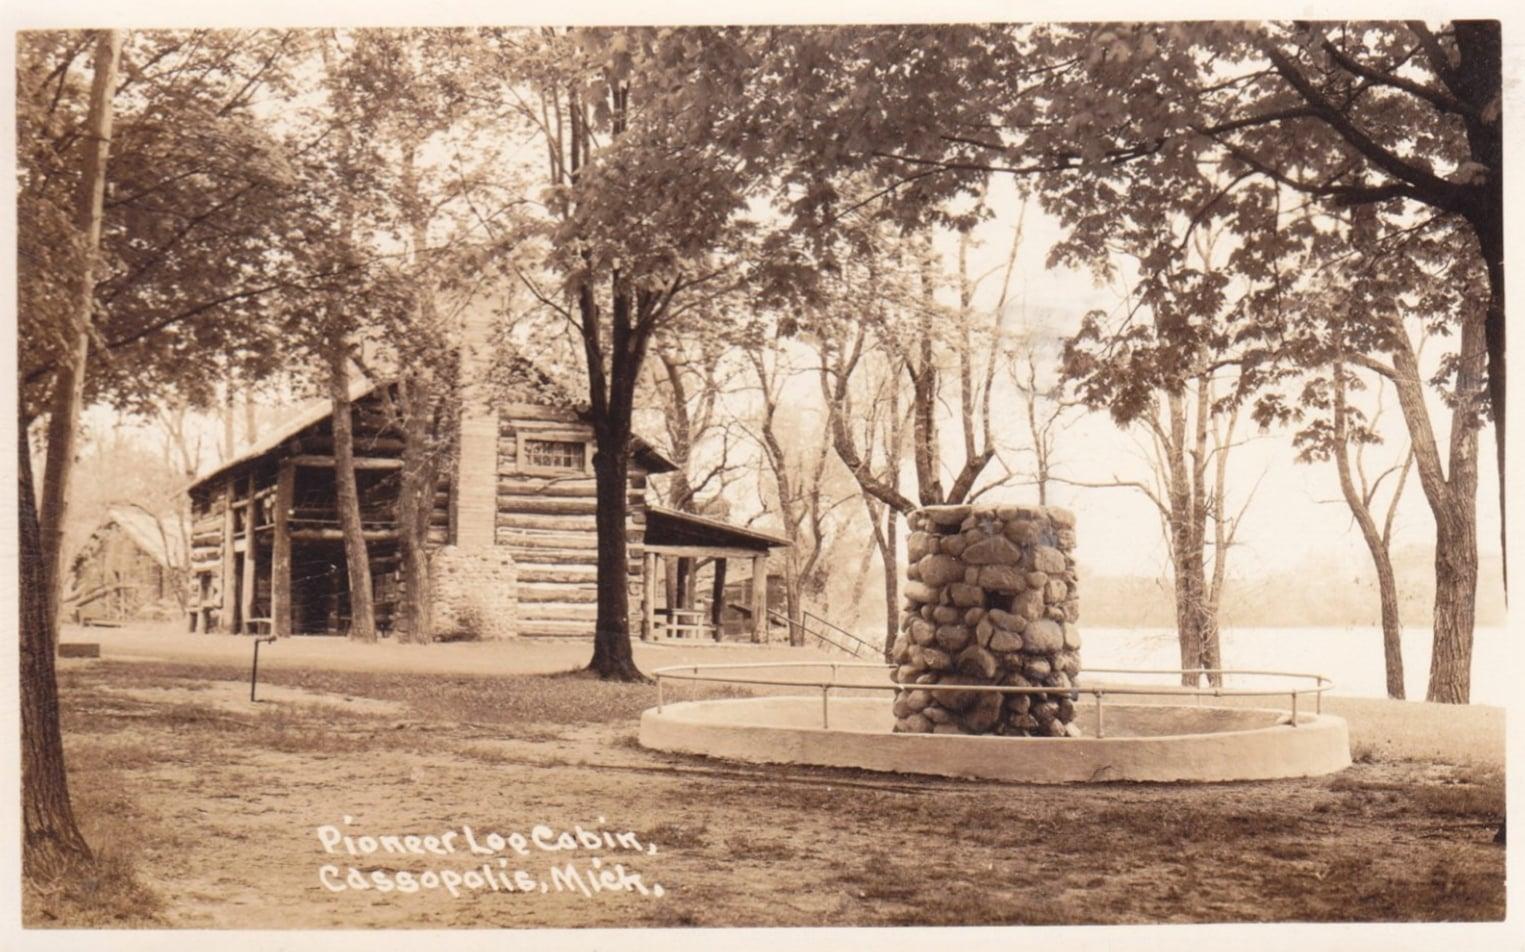 Pioneer Log Cabin Museum | Southwestern Michigan Tourist Council